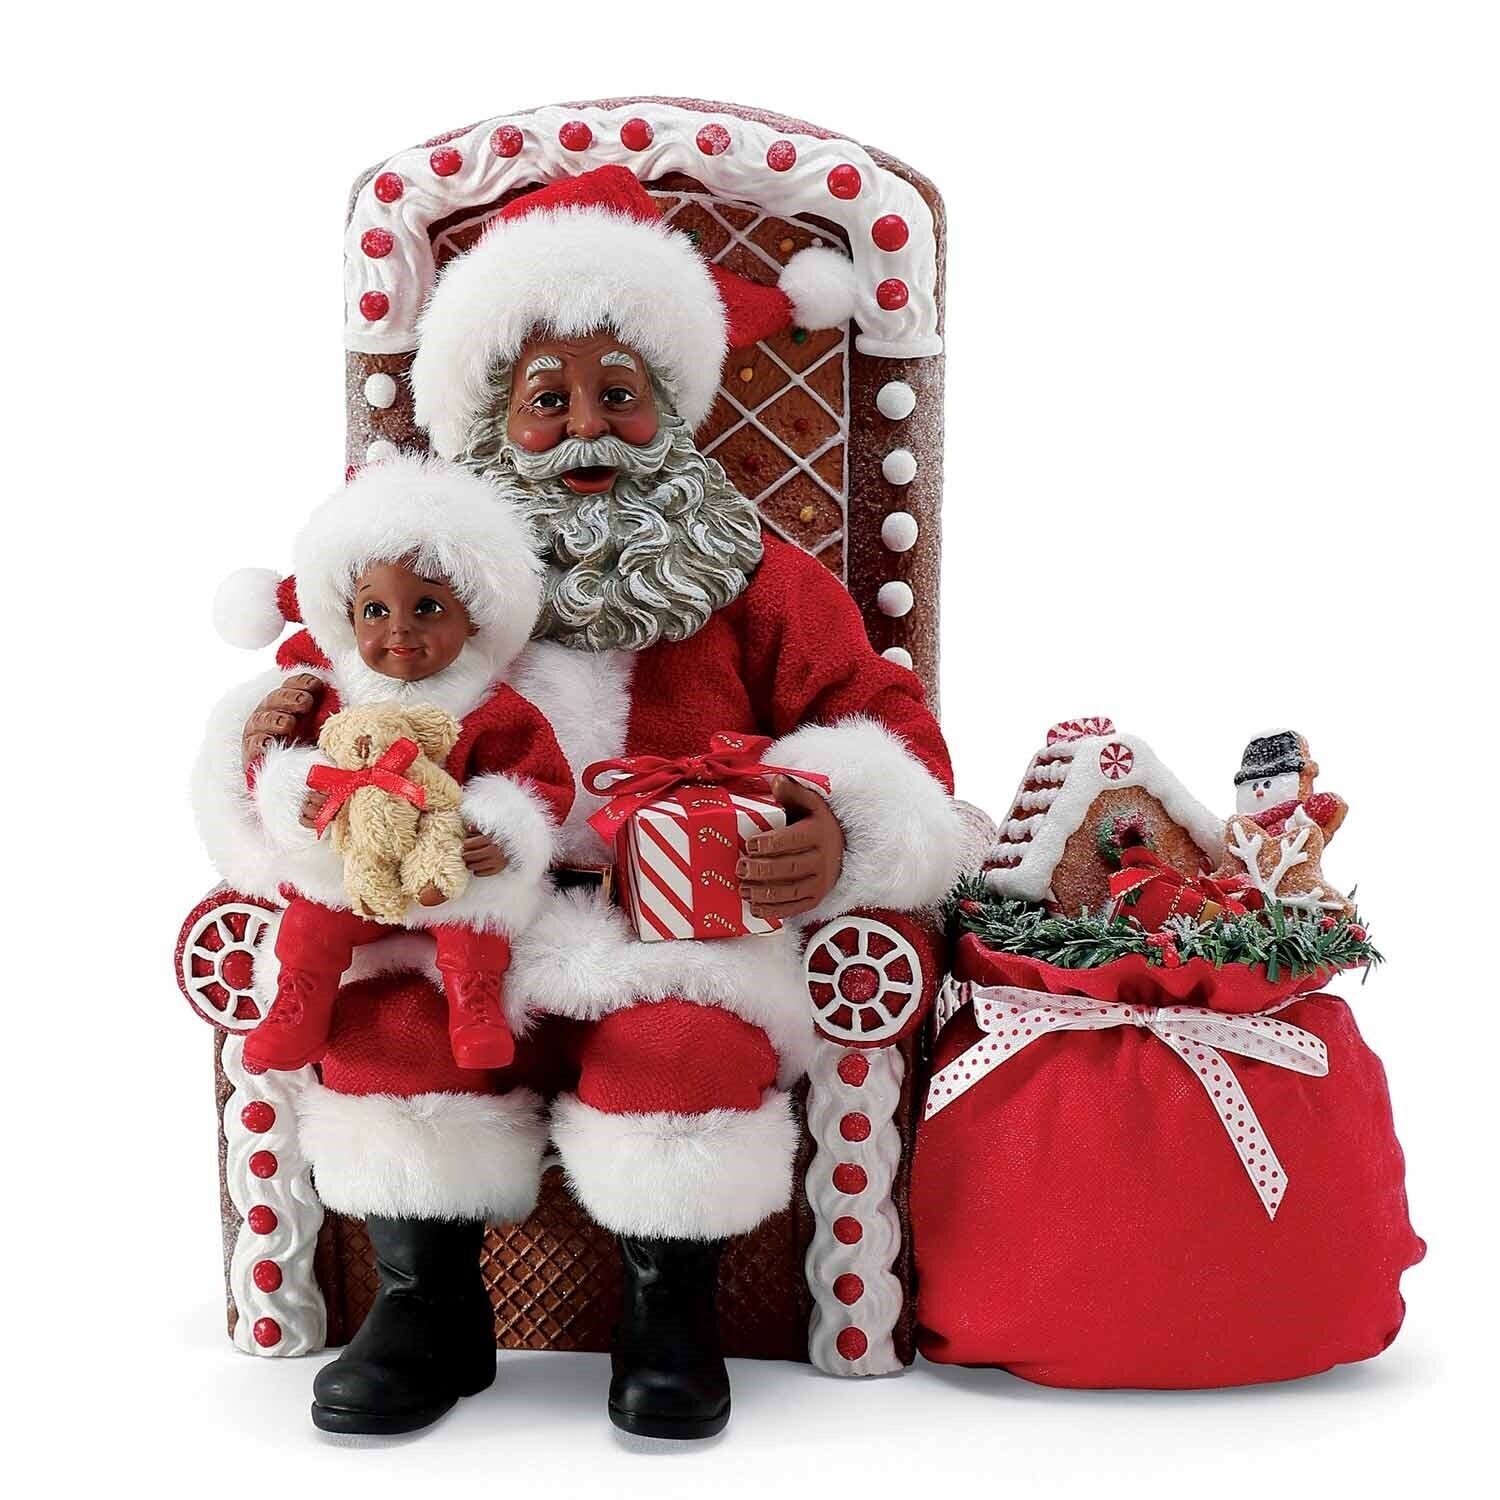 Possible Dreams African American Santa Claus Figurine Gingerbread Chair 6010900